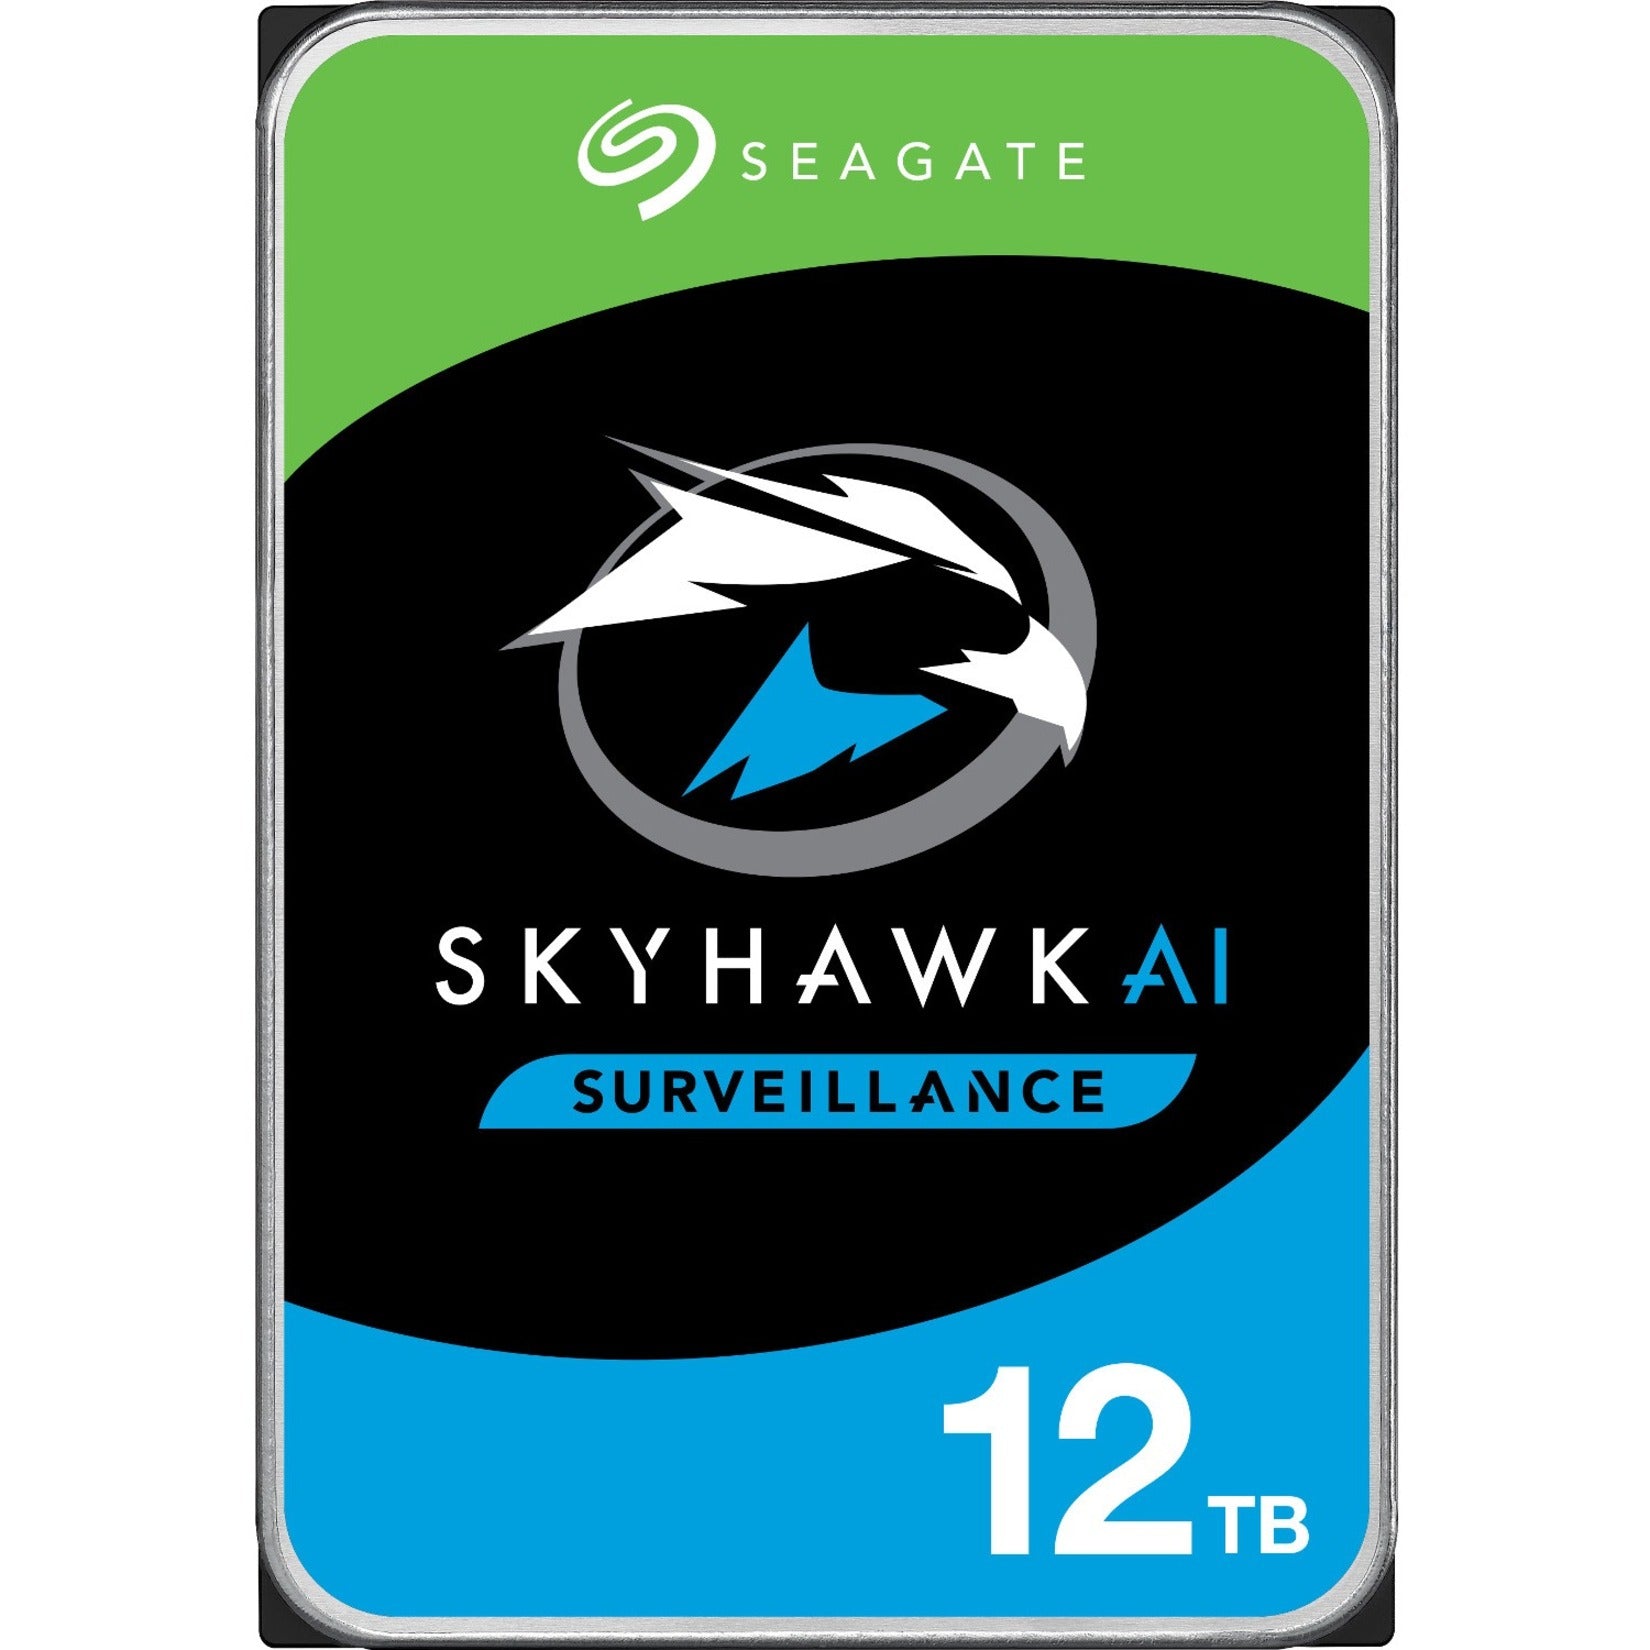 Seagate ST12000VE001 SkyHawk AI 12TB Hard Drive, 24x7 Surveillance Storage